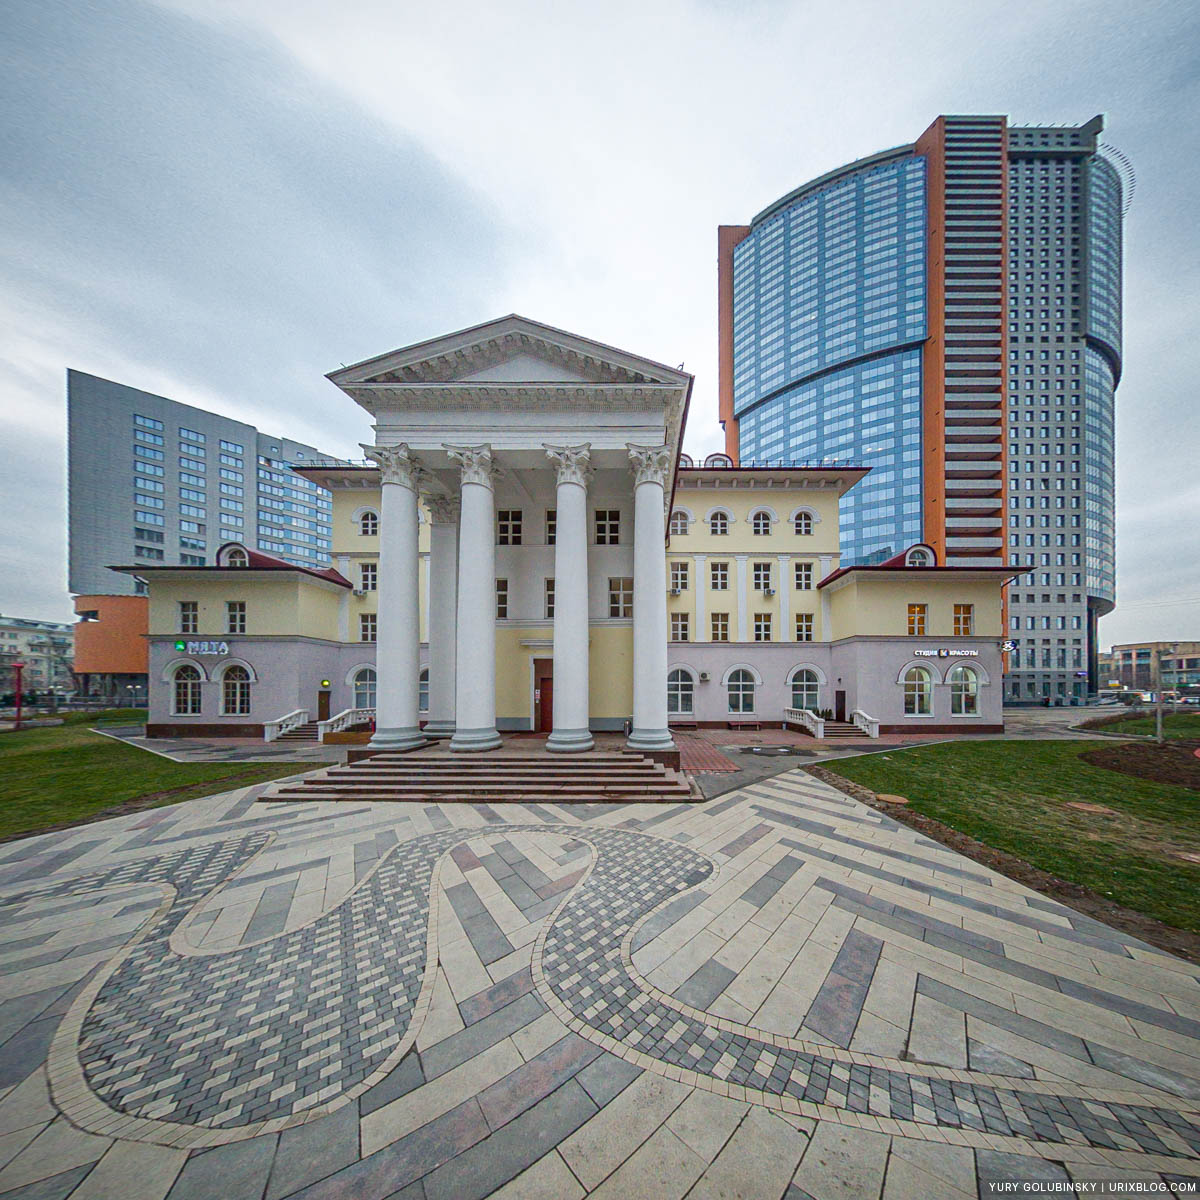 ЖК Царская Площадь, маленькая планета, панорама, Москва, Россия, 2020